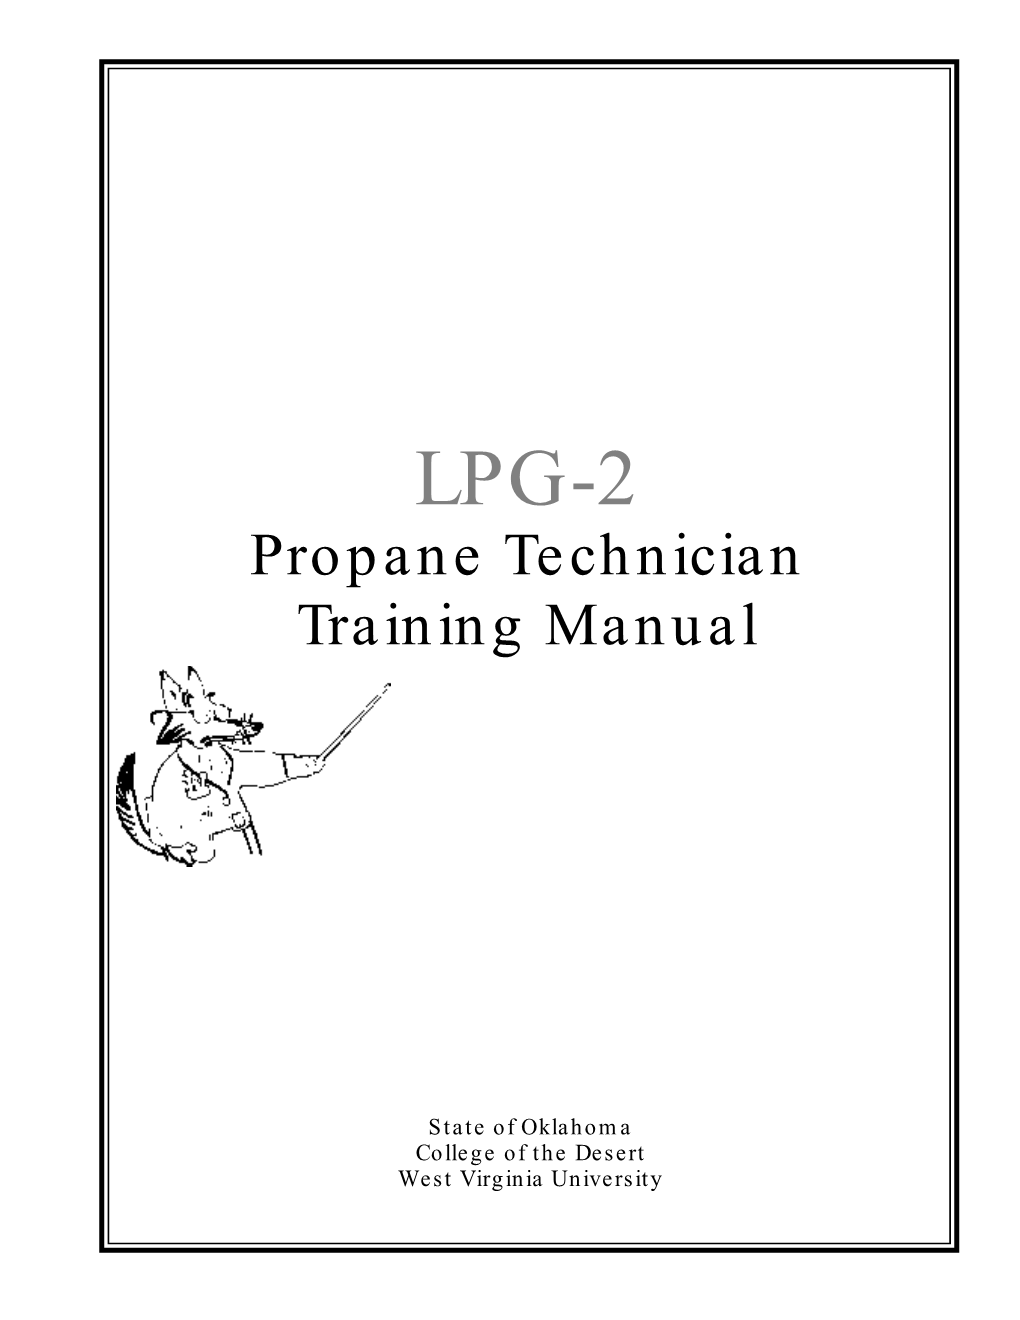 Propane Technician Training Manual